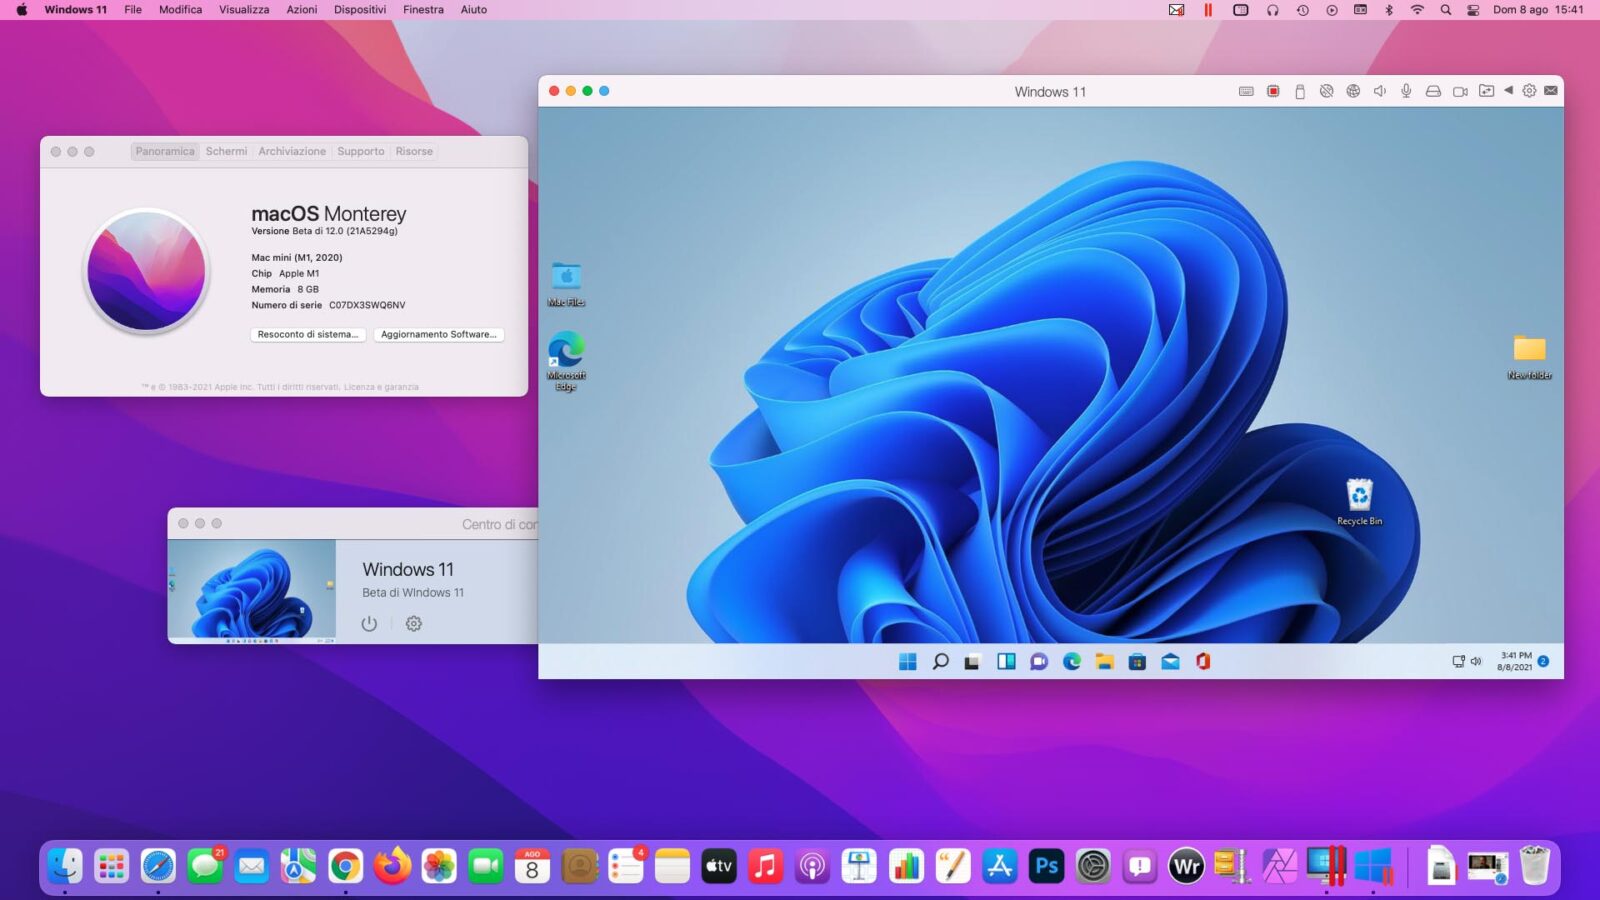 [EMBARGO] Parallels Desktop 17 per Mac per chip M1 e Intel, pronto per Windows 11 e macOS Monterey